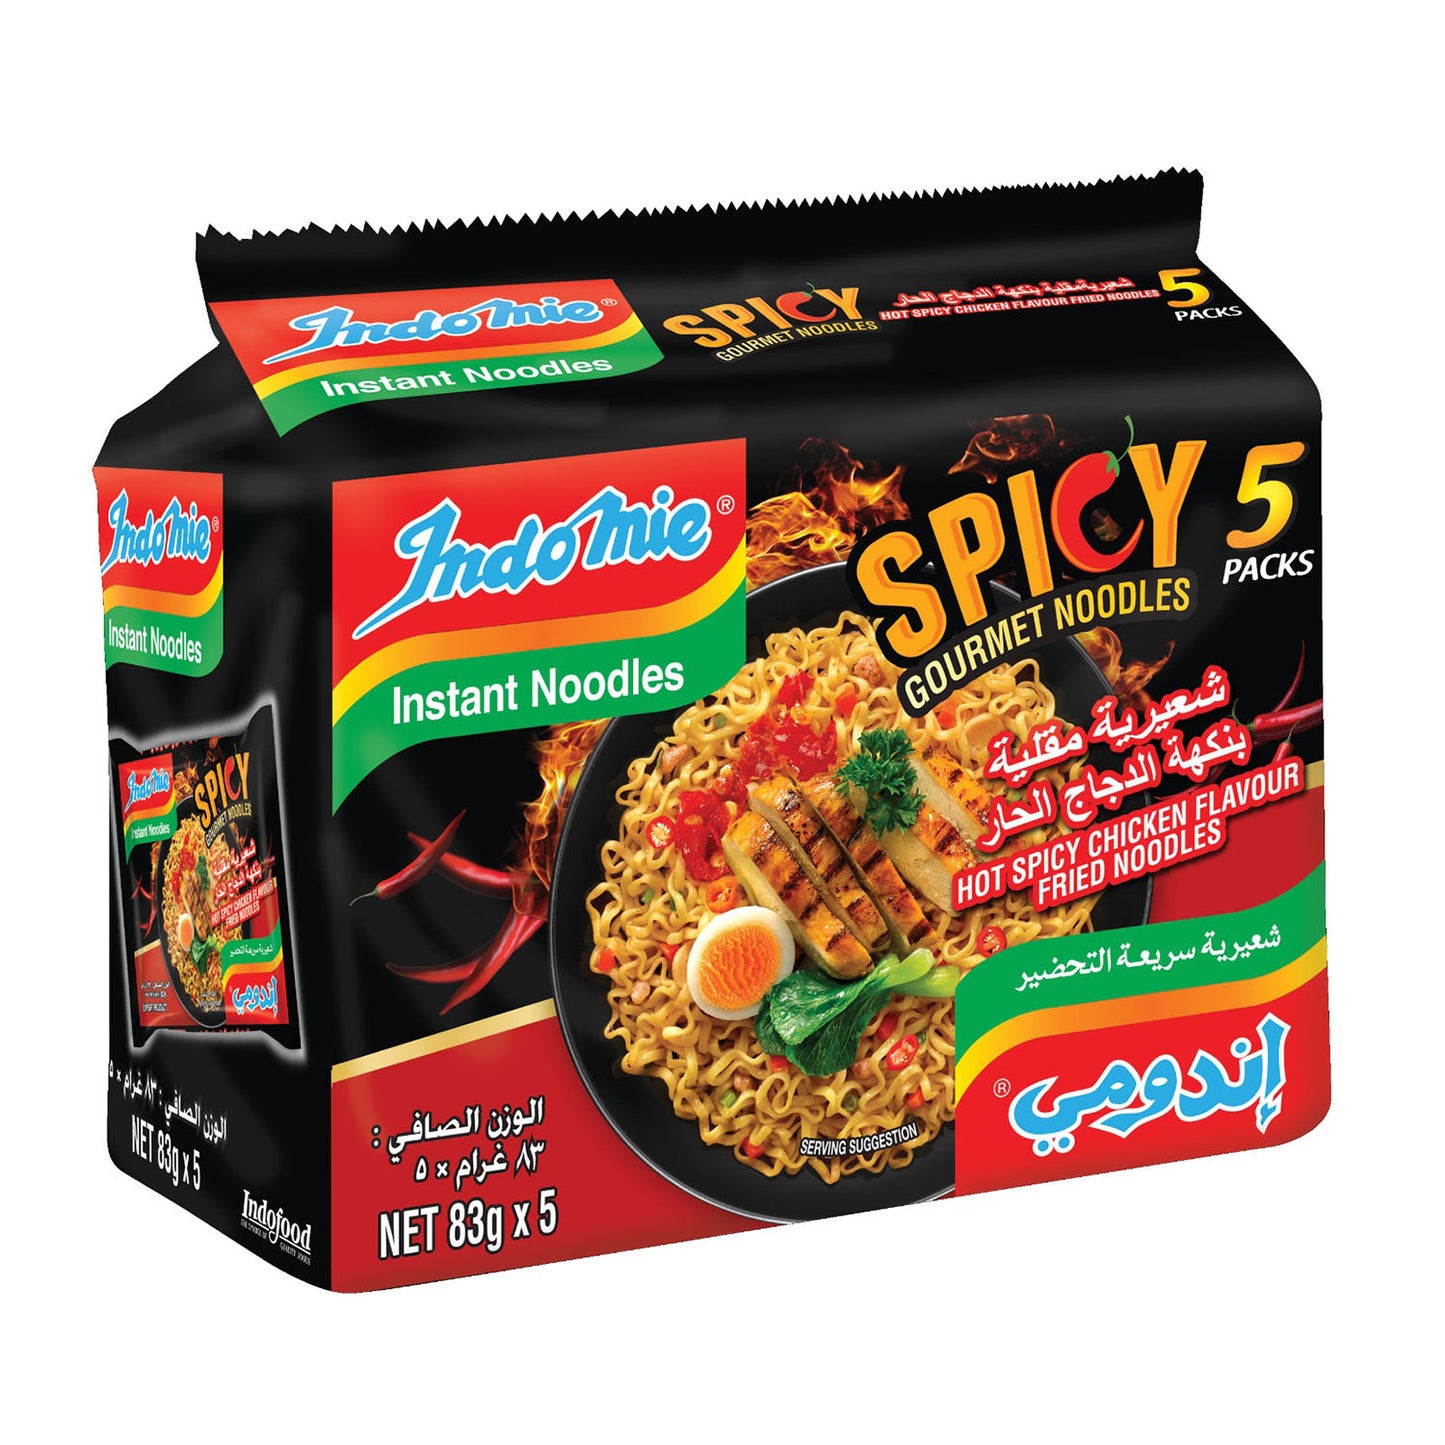 Indomie Hot Spicy Chicken Fried Gourmet Noodles, Halal Certified - 5 Packs Each 83g